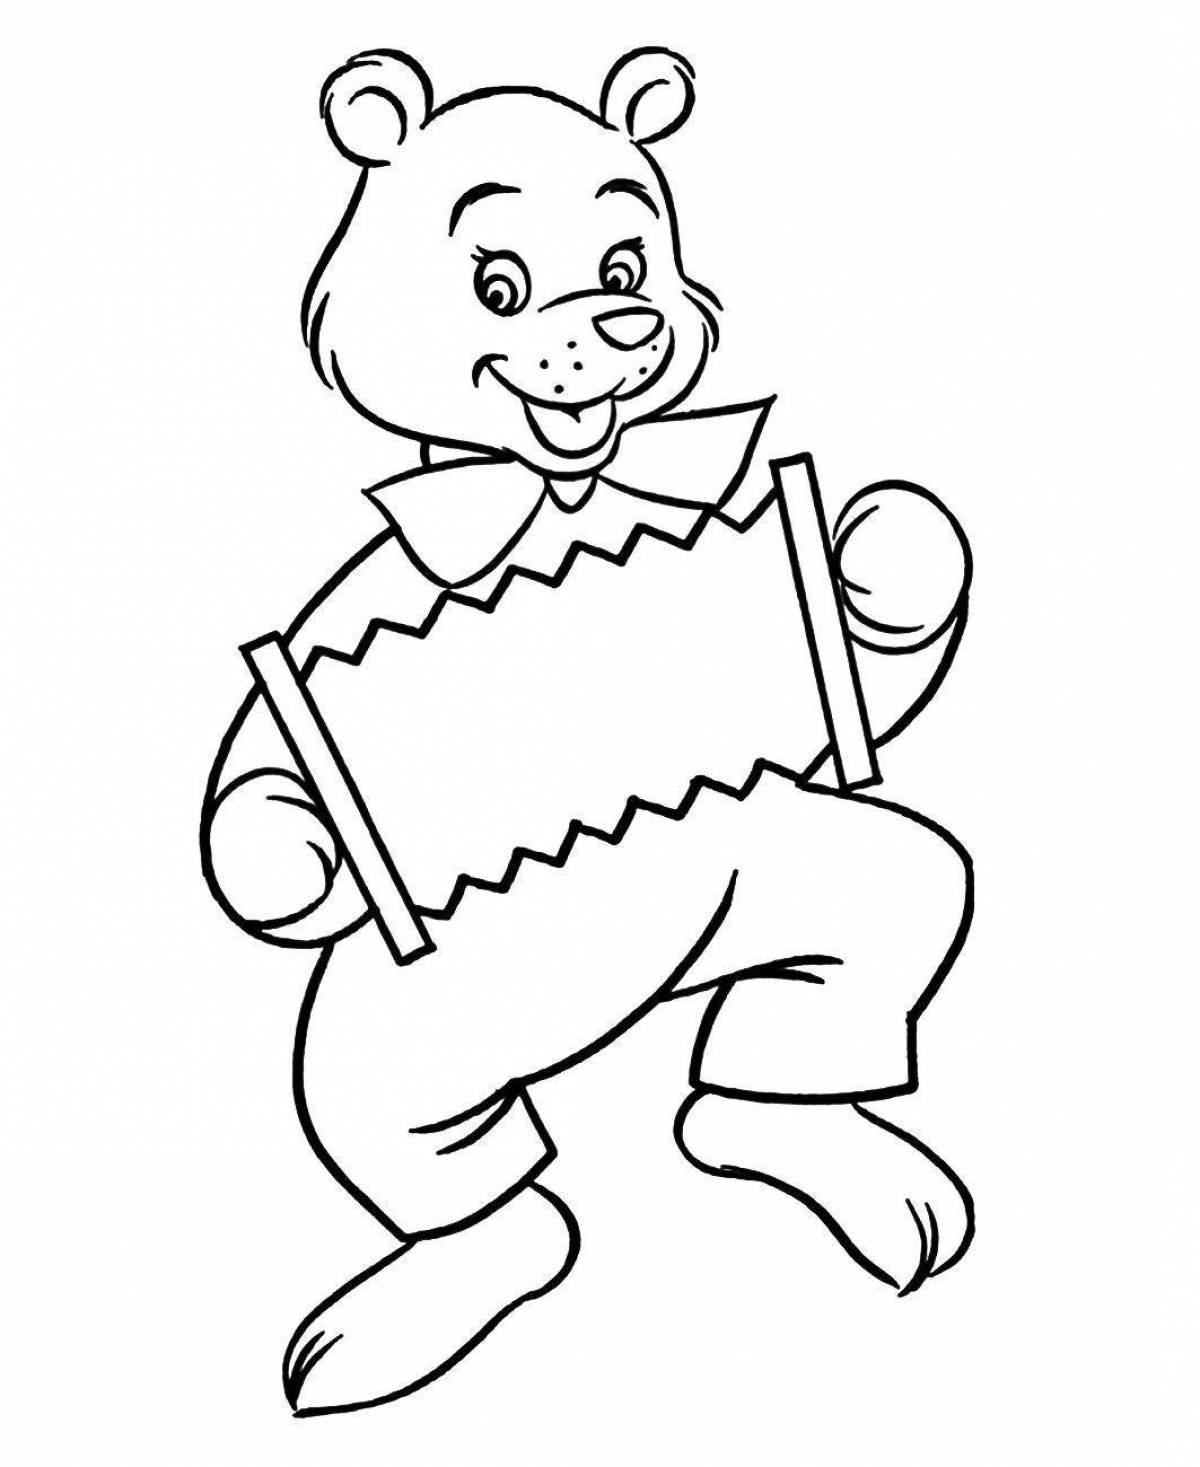 Медведи раскраска игра. Медвежонок раскраска для детей. Медведь раскраска для детей. Цирк раскраска для детей. Медведь с гармошкой раскраска.